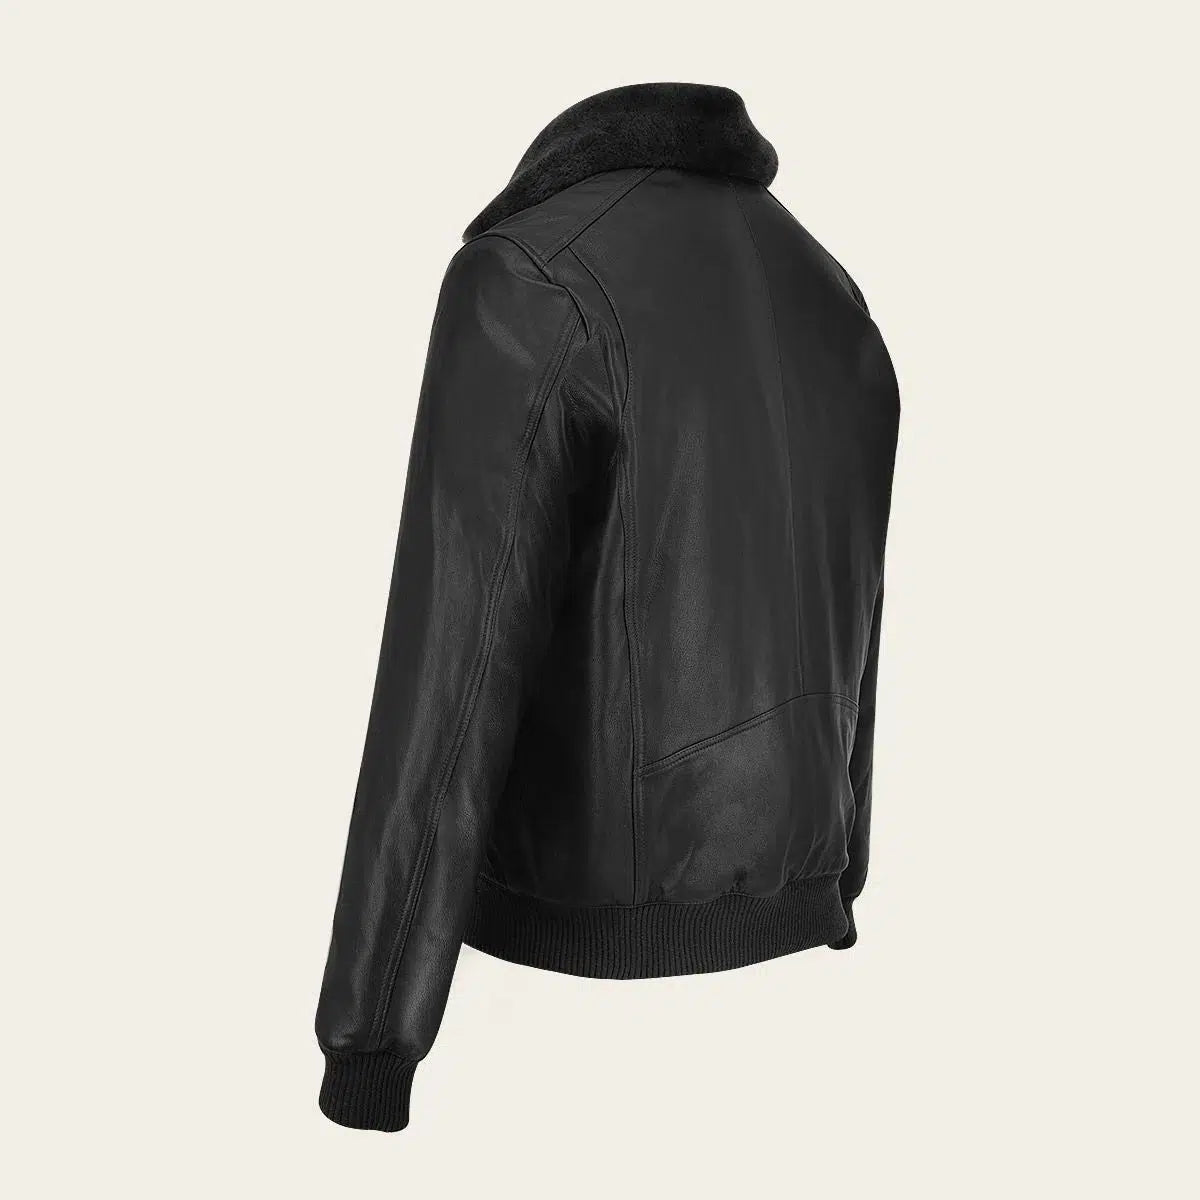 HCHI008 - Cuadra black dress casual fashion aviator leather jacket for men-Kuet.us